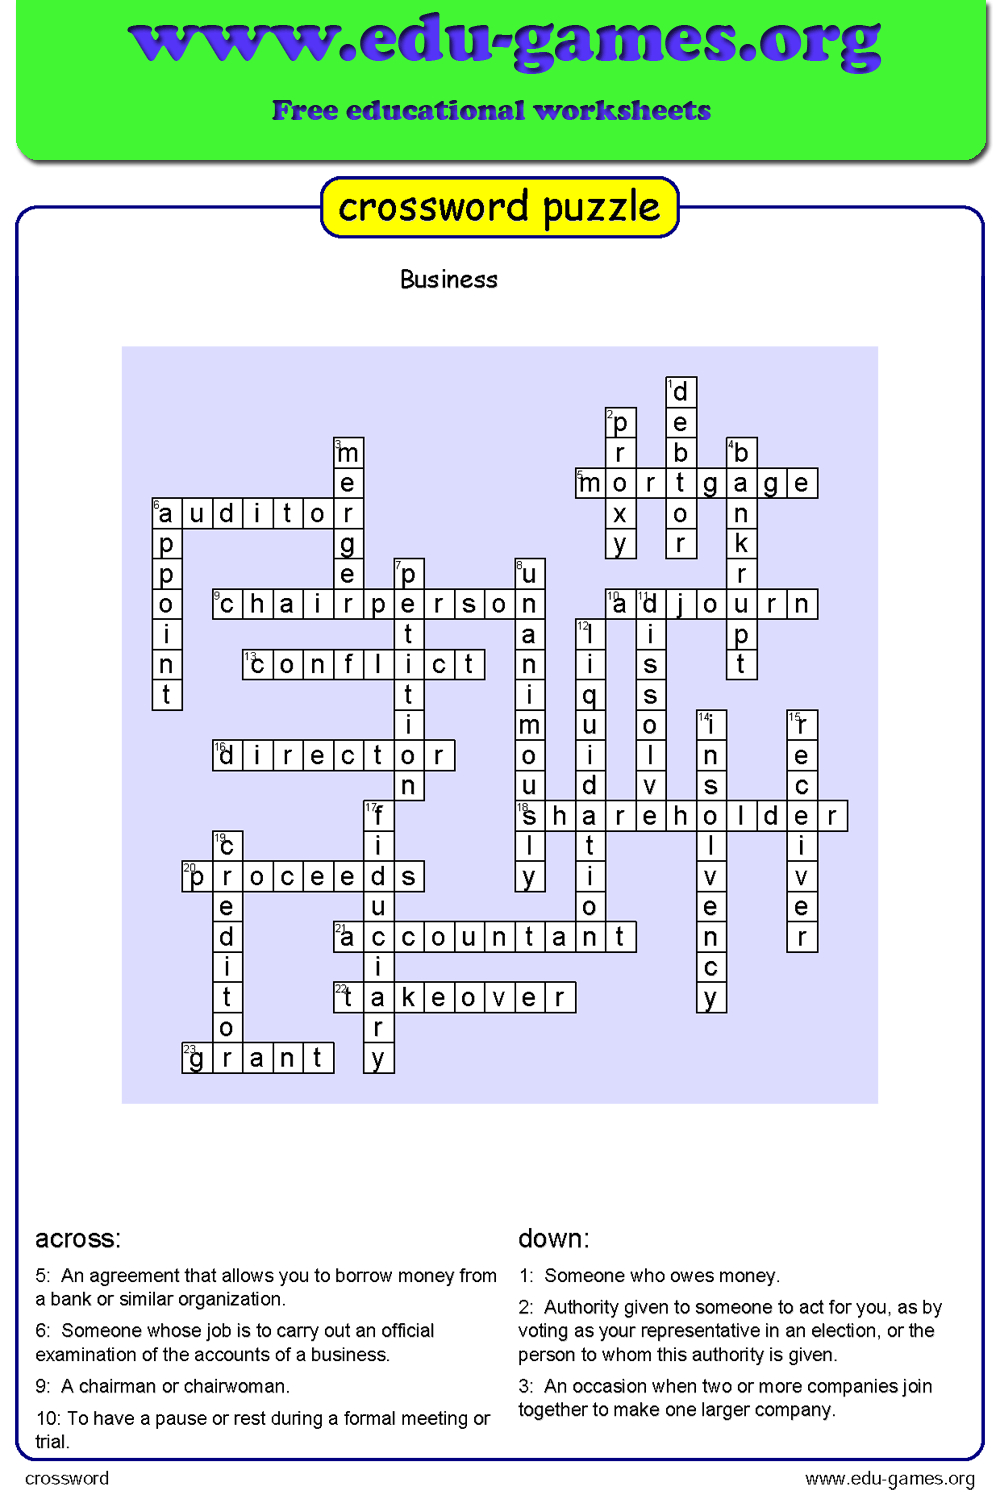 Free Crossword Maker For Kids - The Puzzle Maker Site - Crossword Maker Free Printable